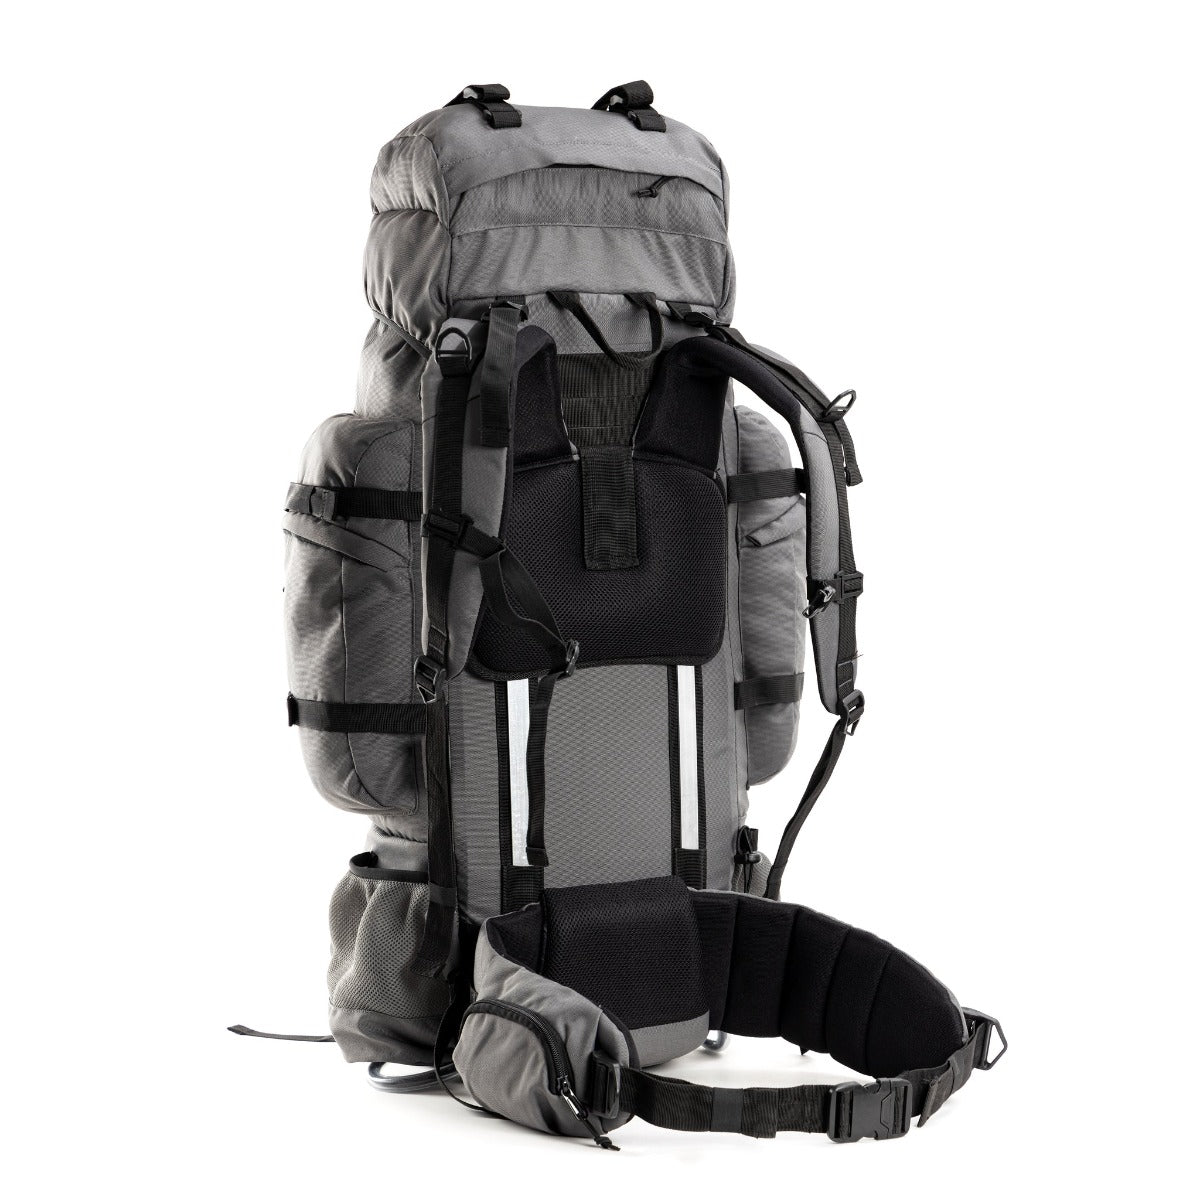 Colonel Pro Metal Frame Rucksack + Detachable Bag & Rain Cover - 105 Litres - Grey 4